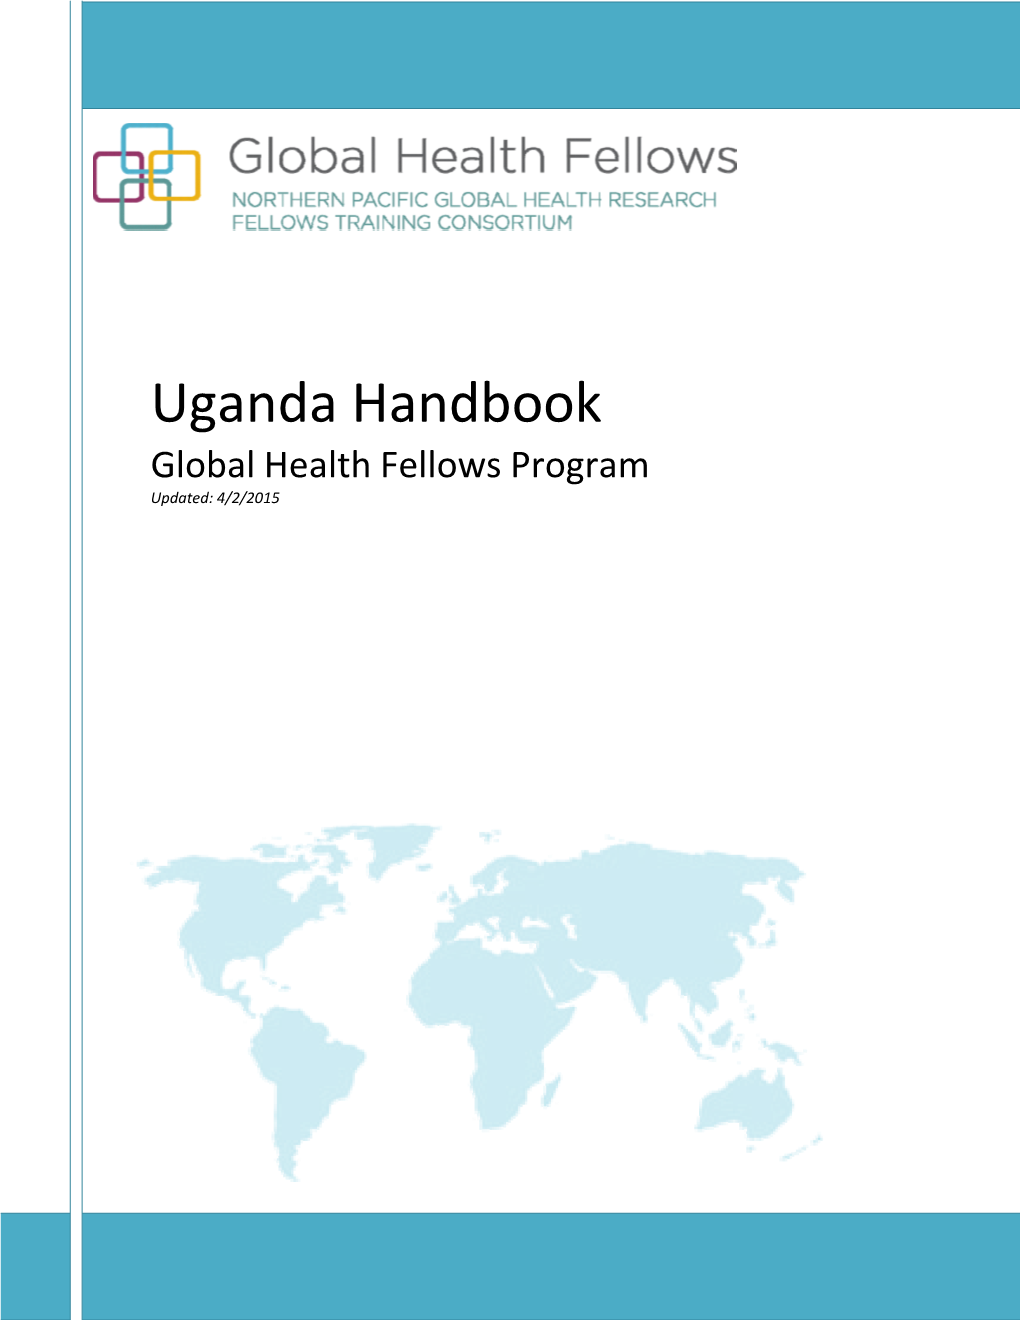 Uganda Handbook Global Health Fellows Program Updated: 4/2/2015